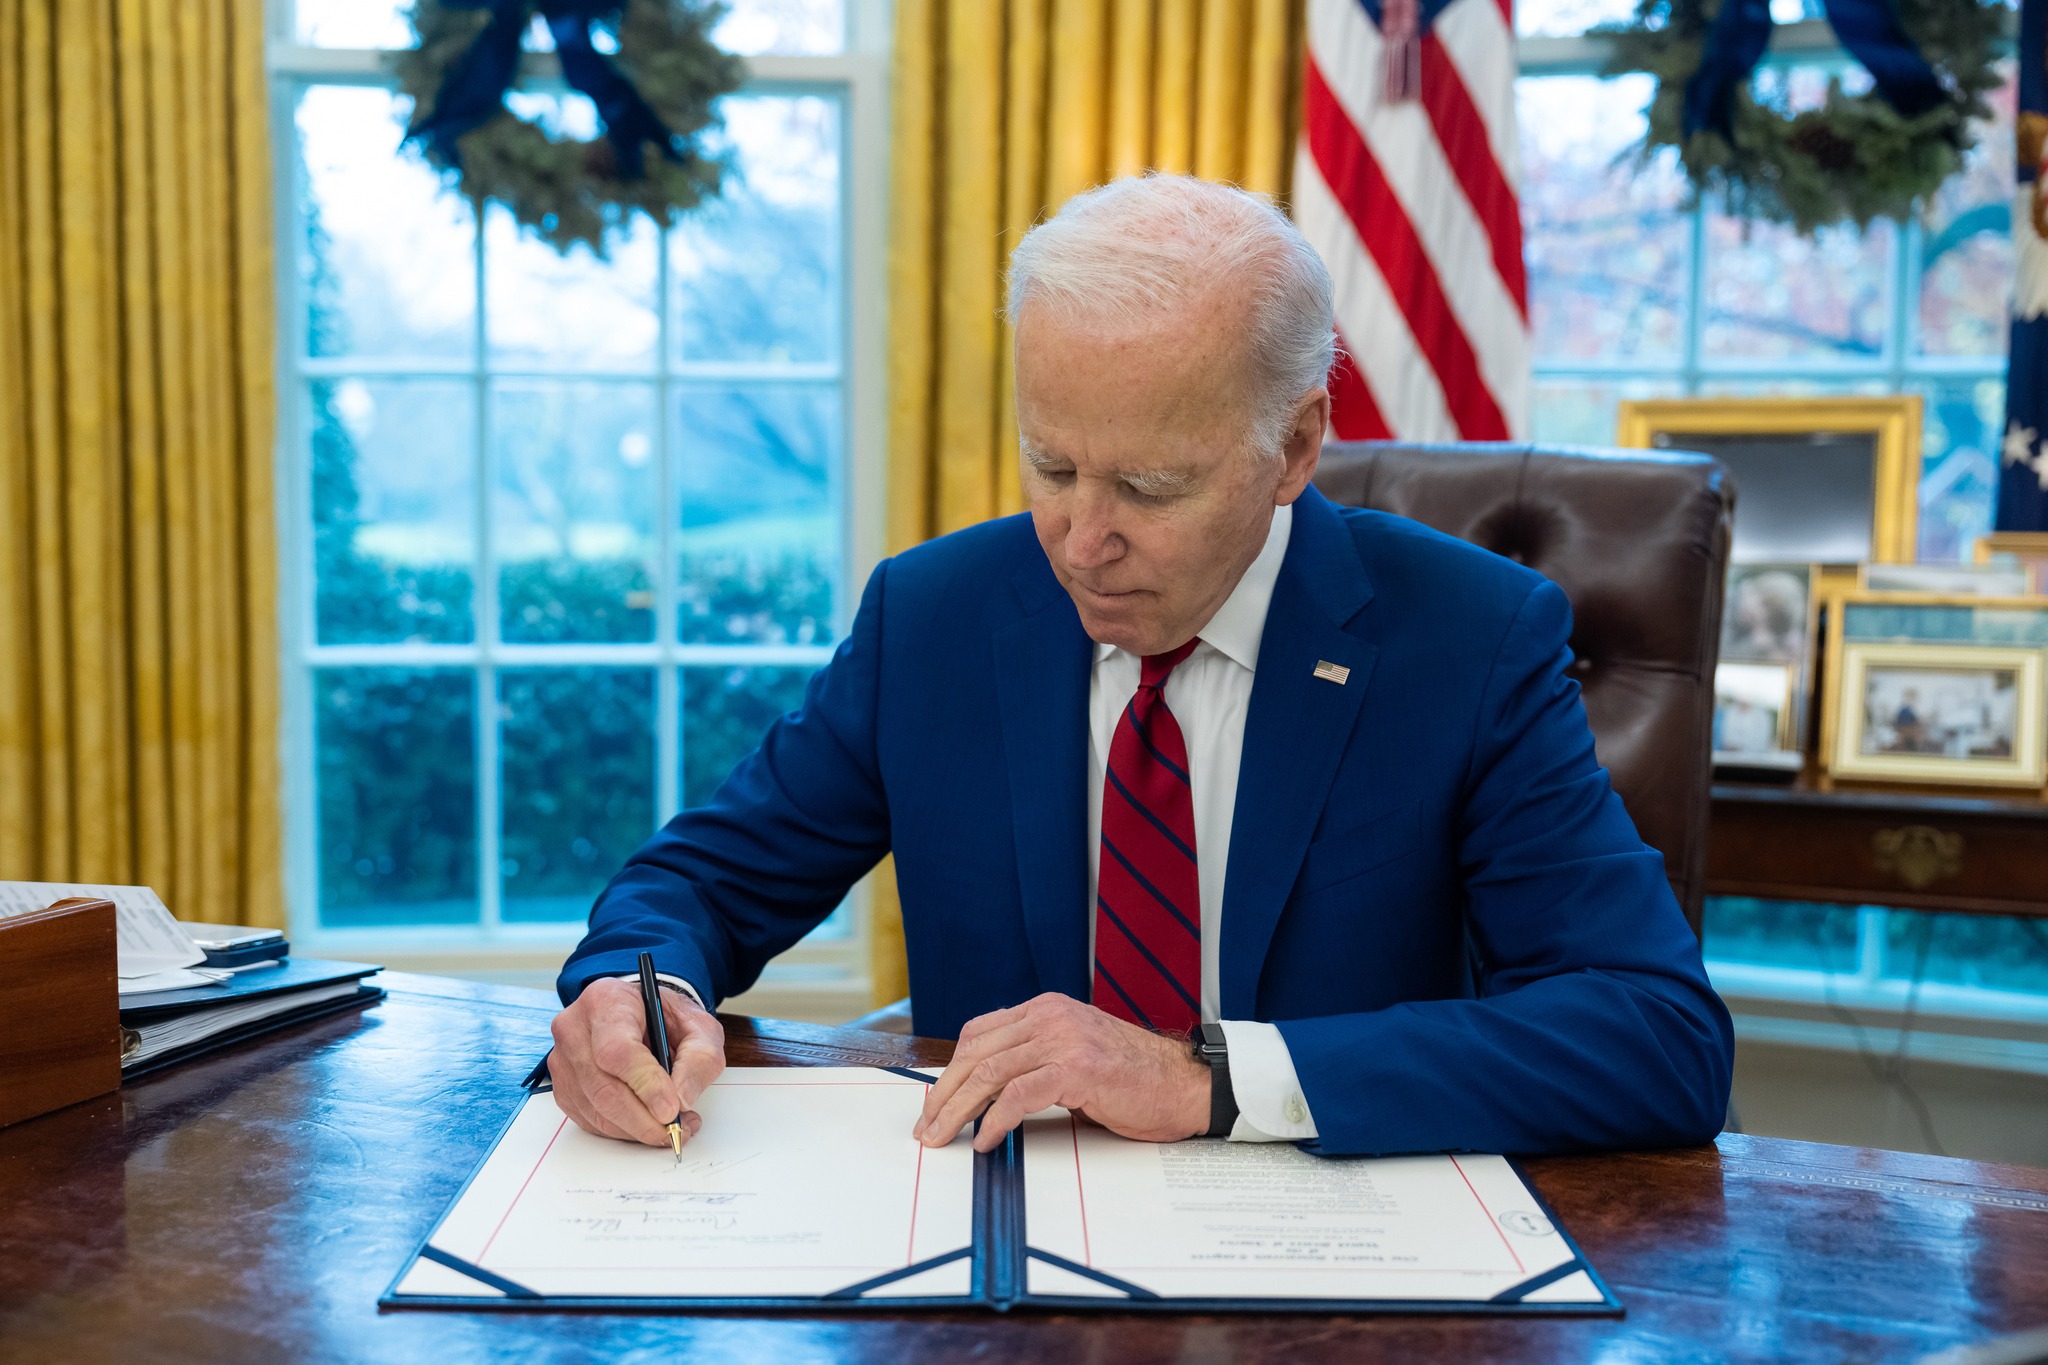 President Biden to Take Executive Order to Reduce Gun Violence to Make Our Communities Safer